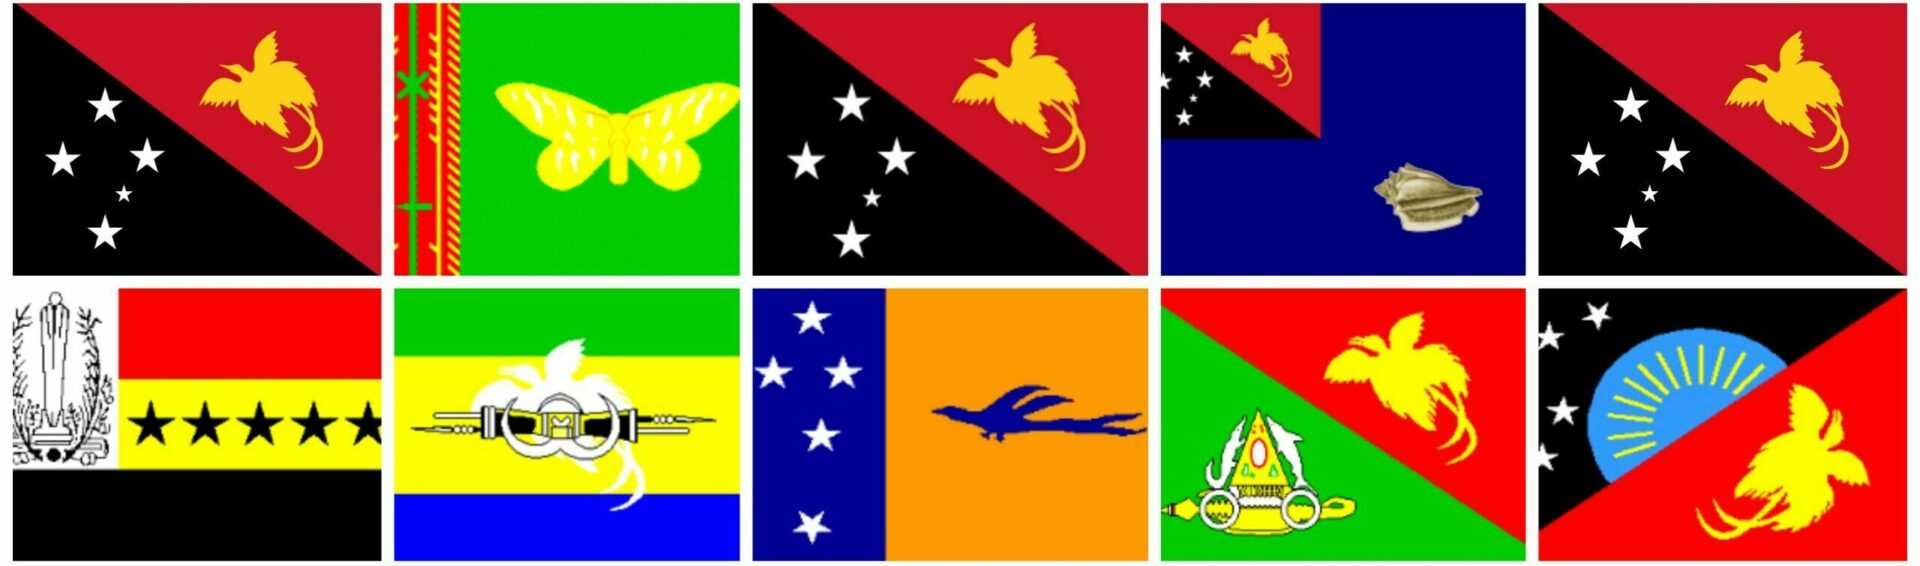 papua new guinea flag symbols